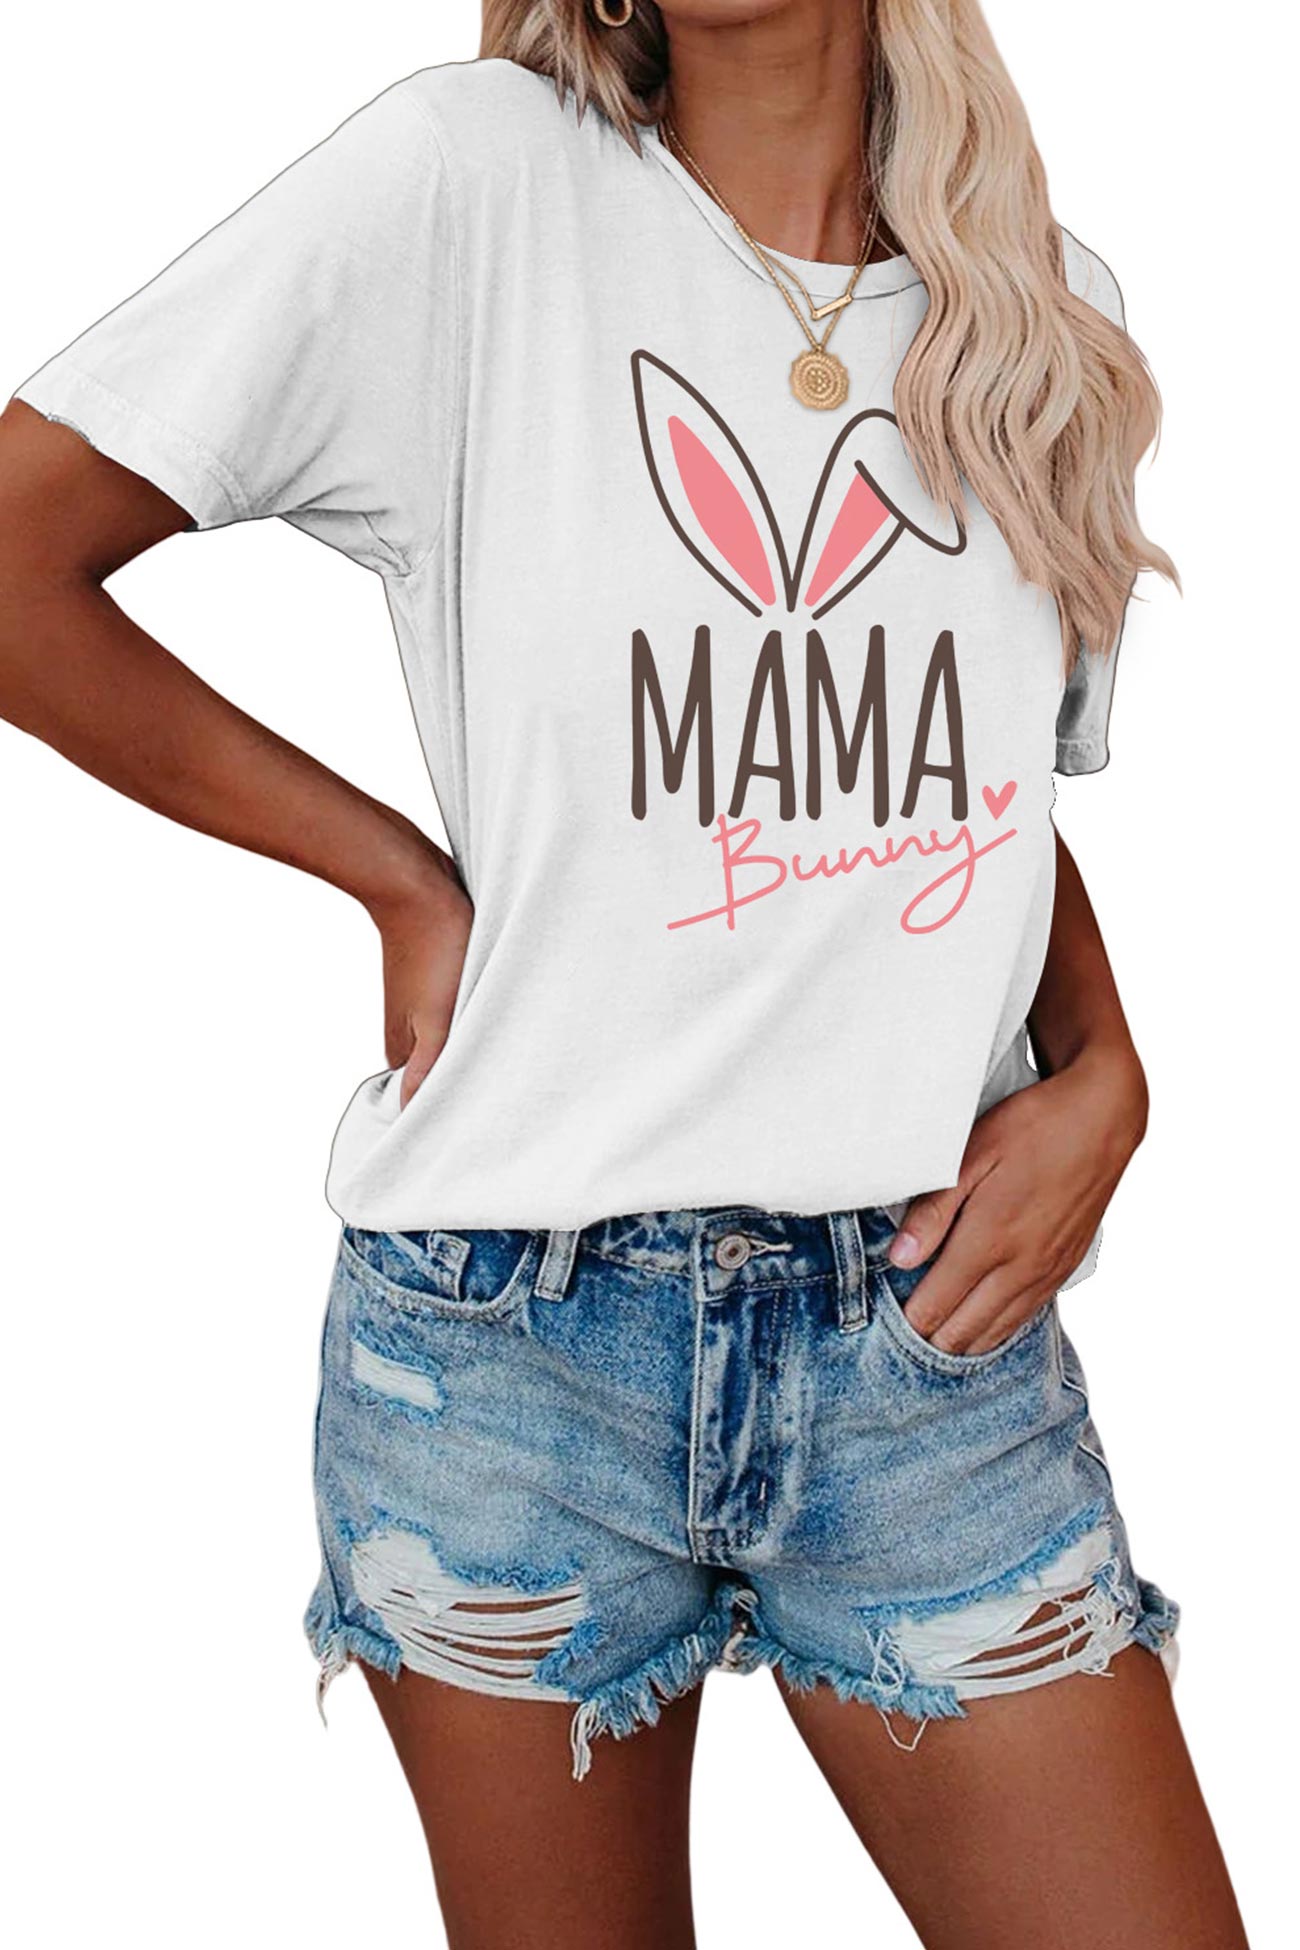 Mama Bunny Graphic T-shirt